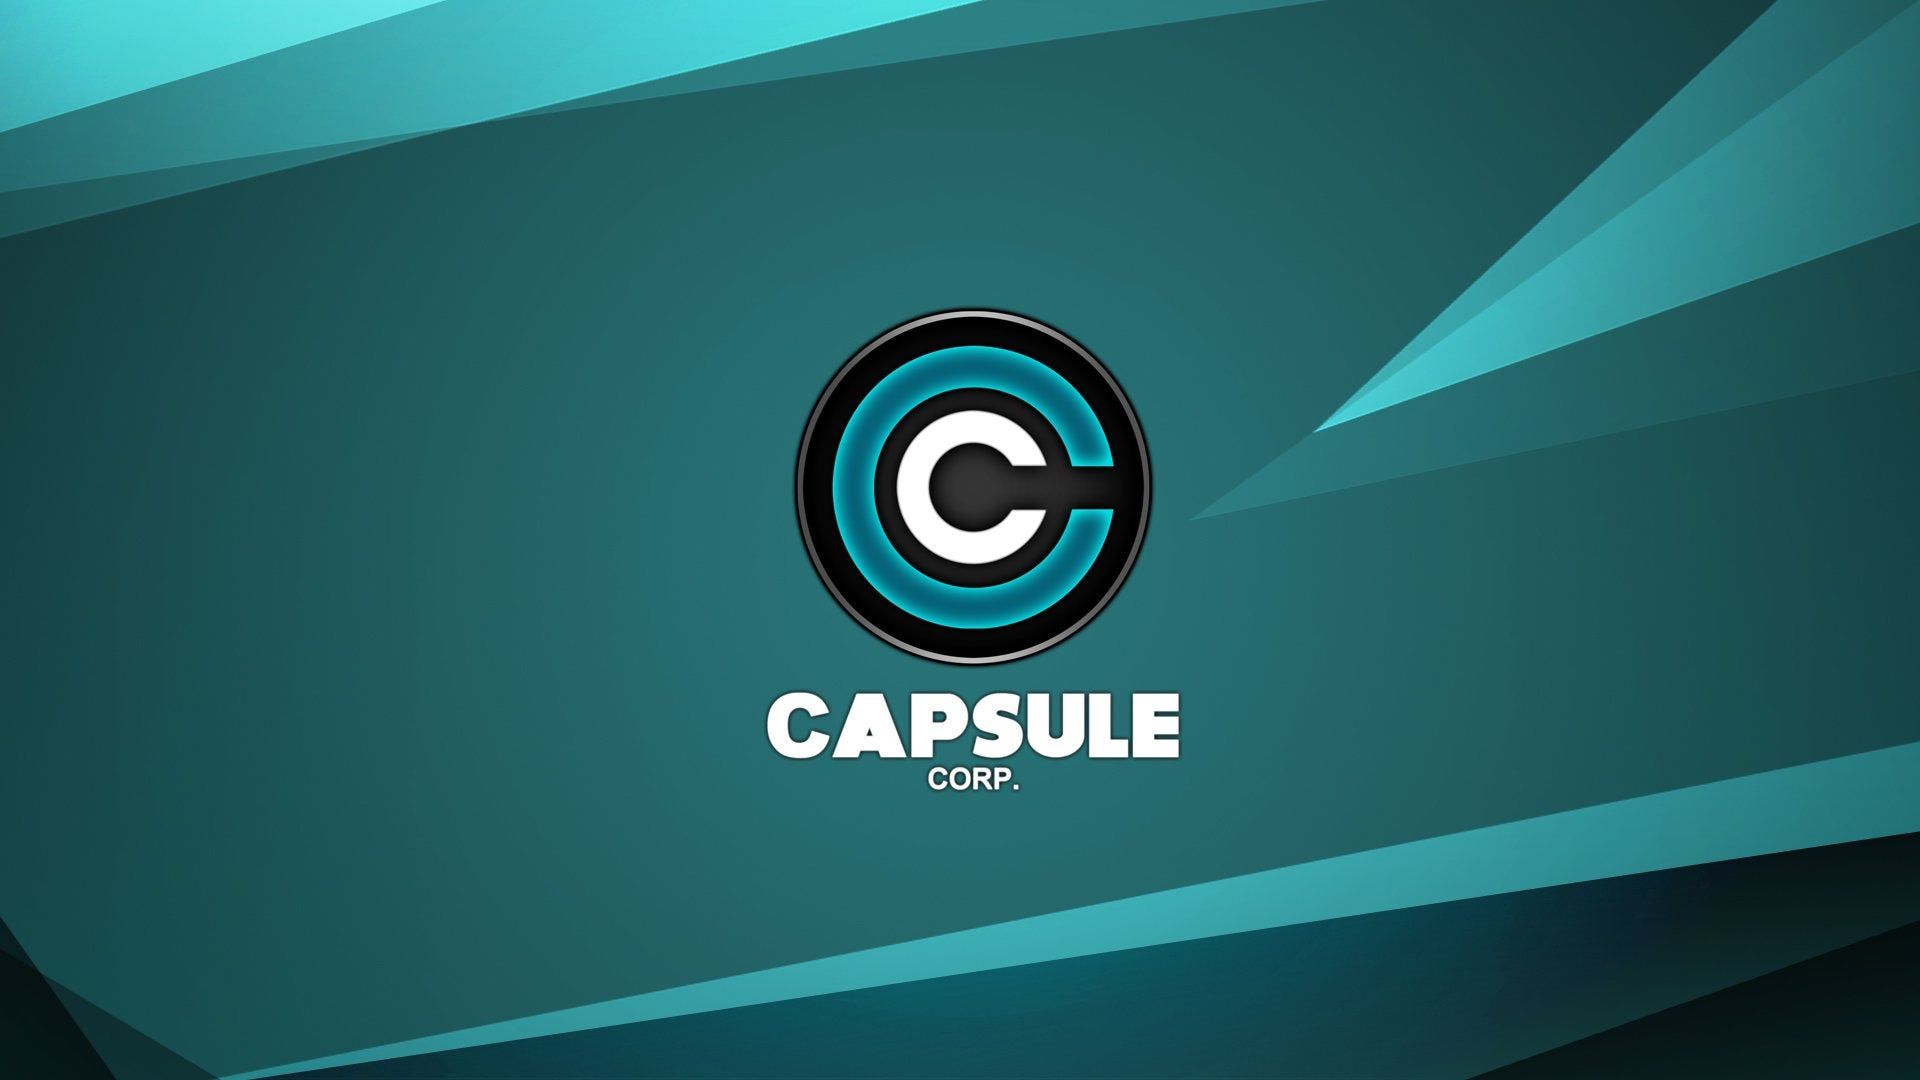 Capsule Corp Phone Desktop Wallpaper In 720 1080 Resolutions, Hope You Enjoy!